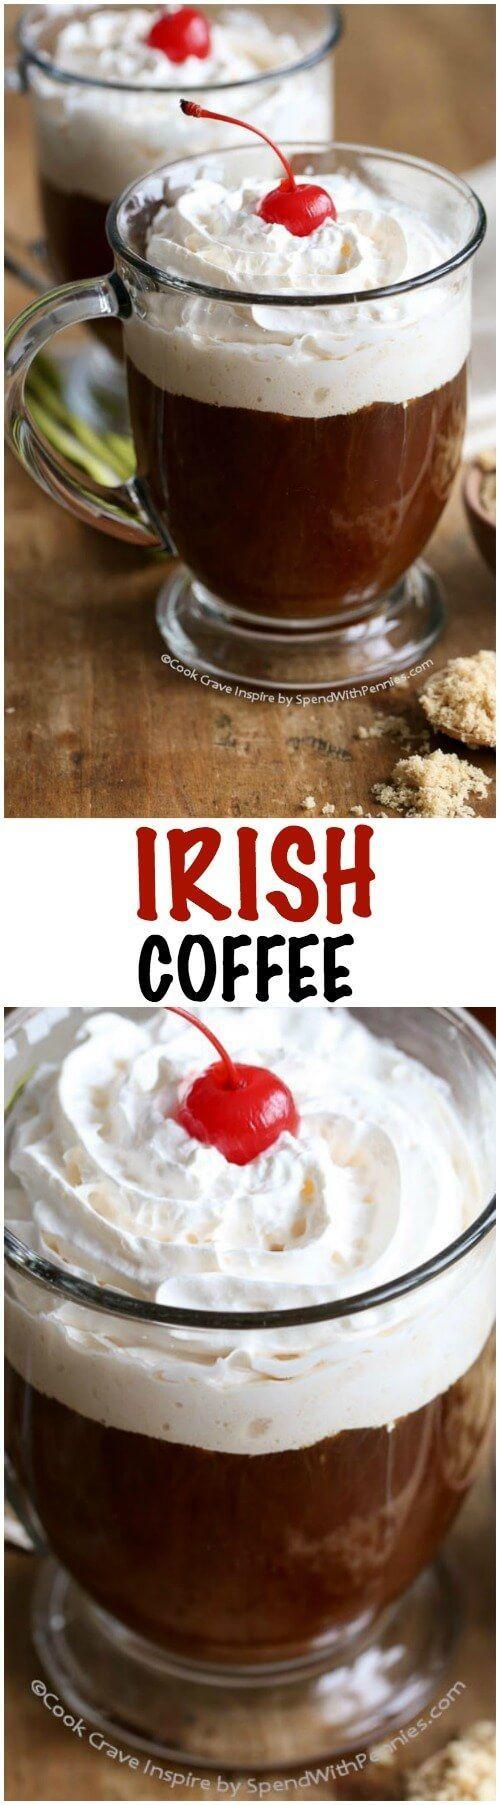 Wedding - Irish Coffee